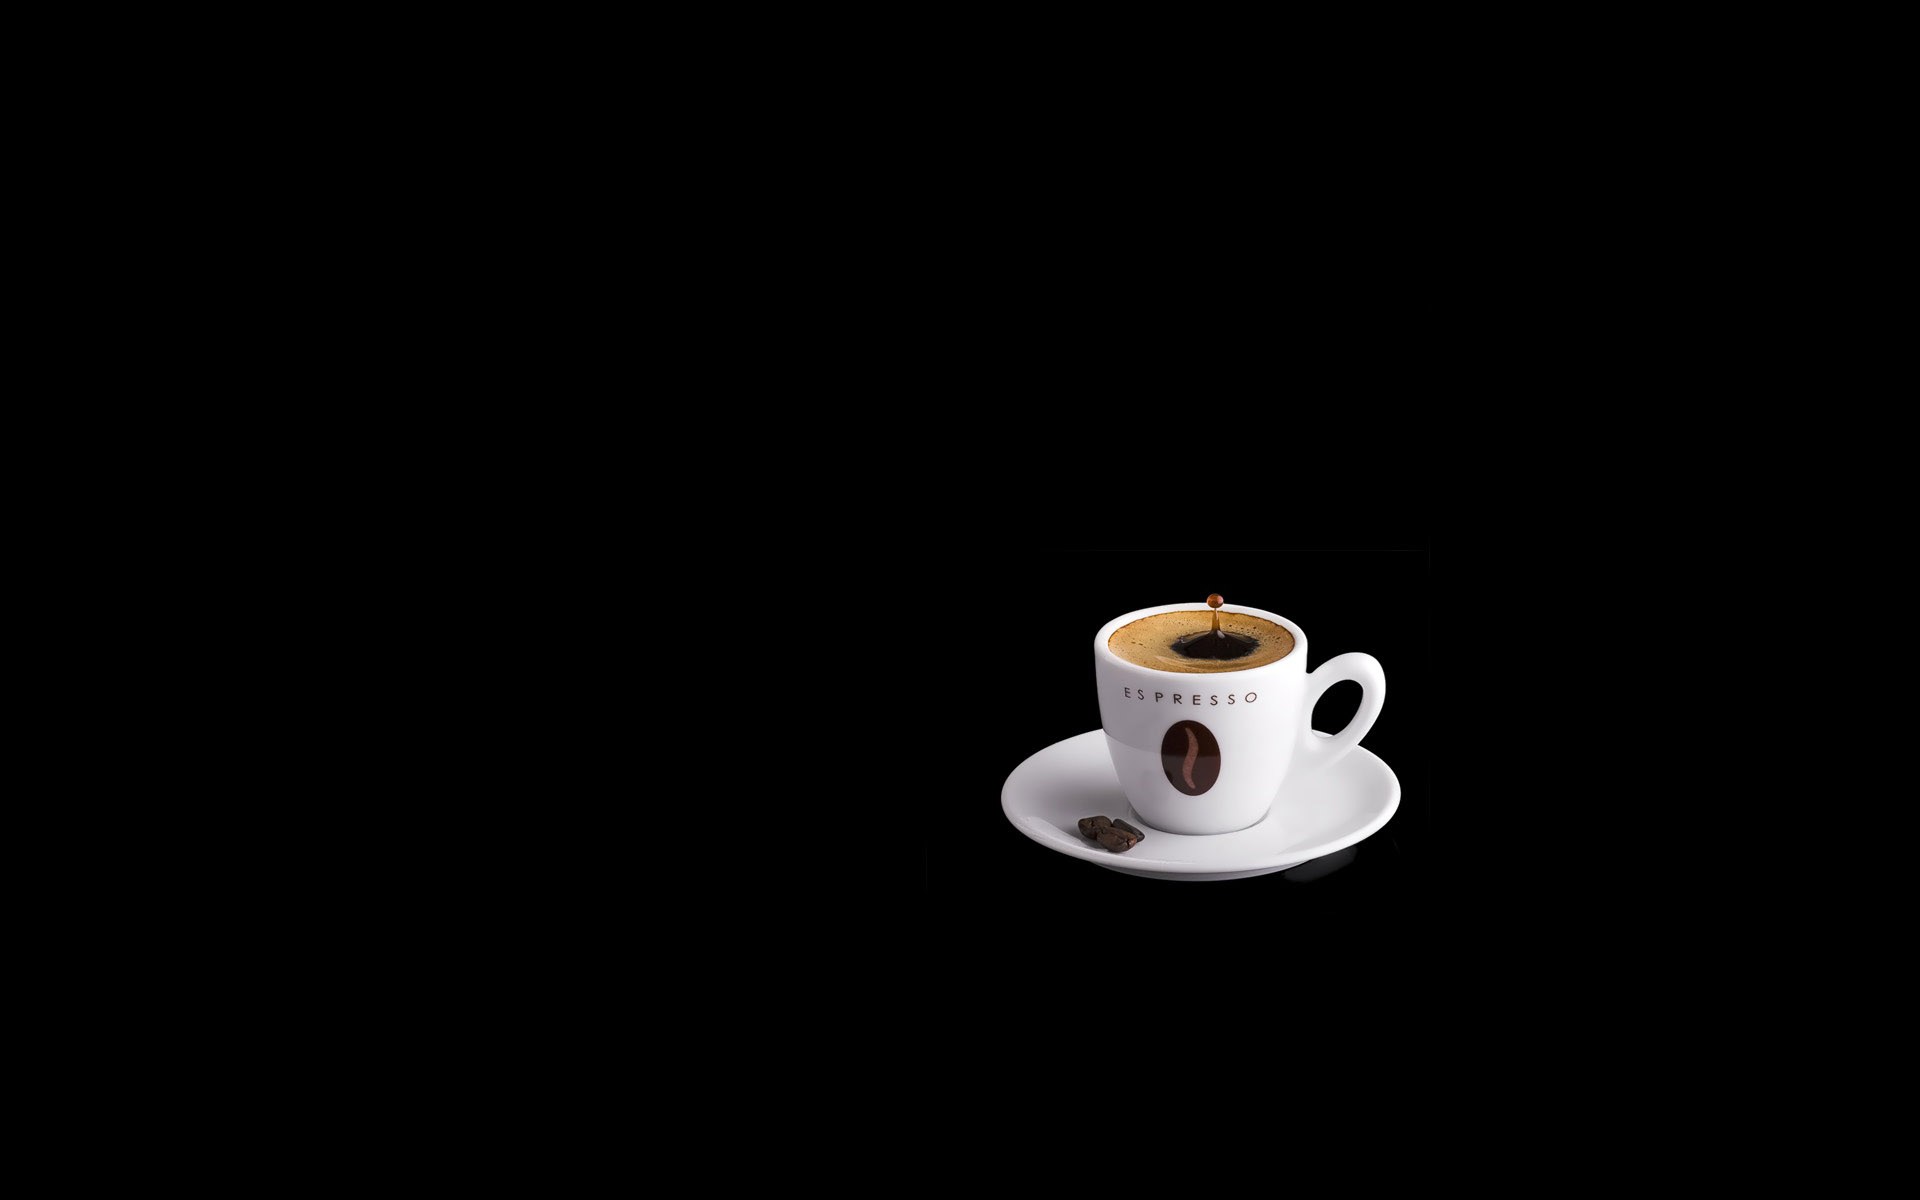 General 1920x1200 black background minimalism espresso cup coffee simple background digital art